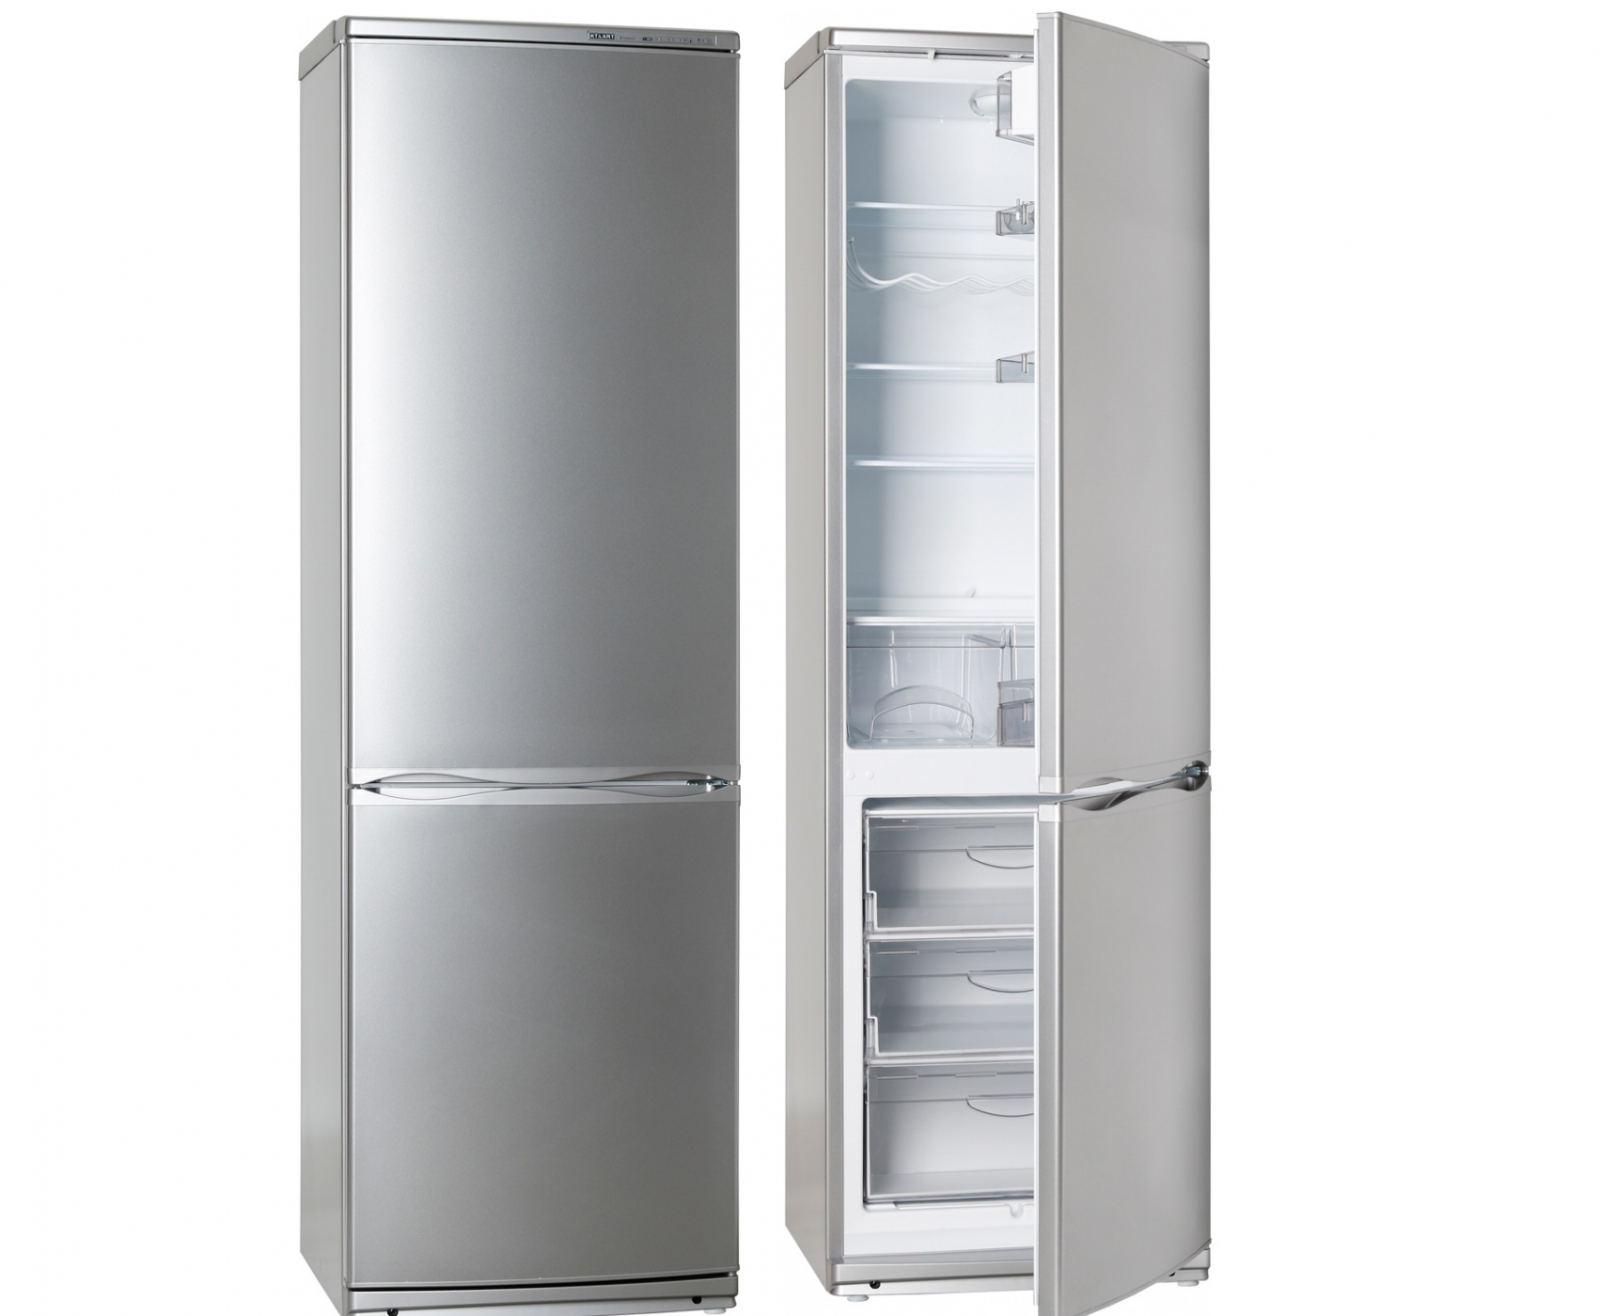 холодильник atlant xm 6024-080, купить в Красноярске холодильник atlant xm 6024-080,  купить в Красноярске дешево холодильник atlant xm 6024-080, купить в Красноярске минимальной цене холодильник atlant xm 6024-080